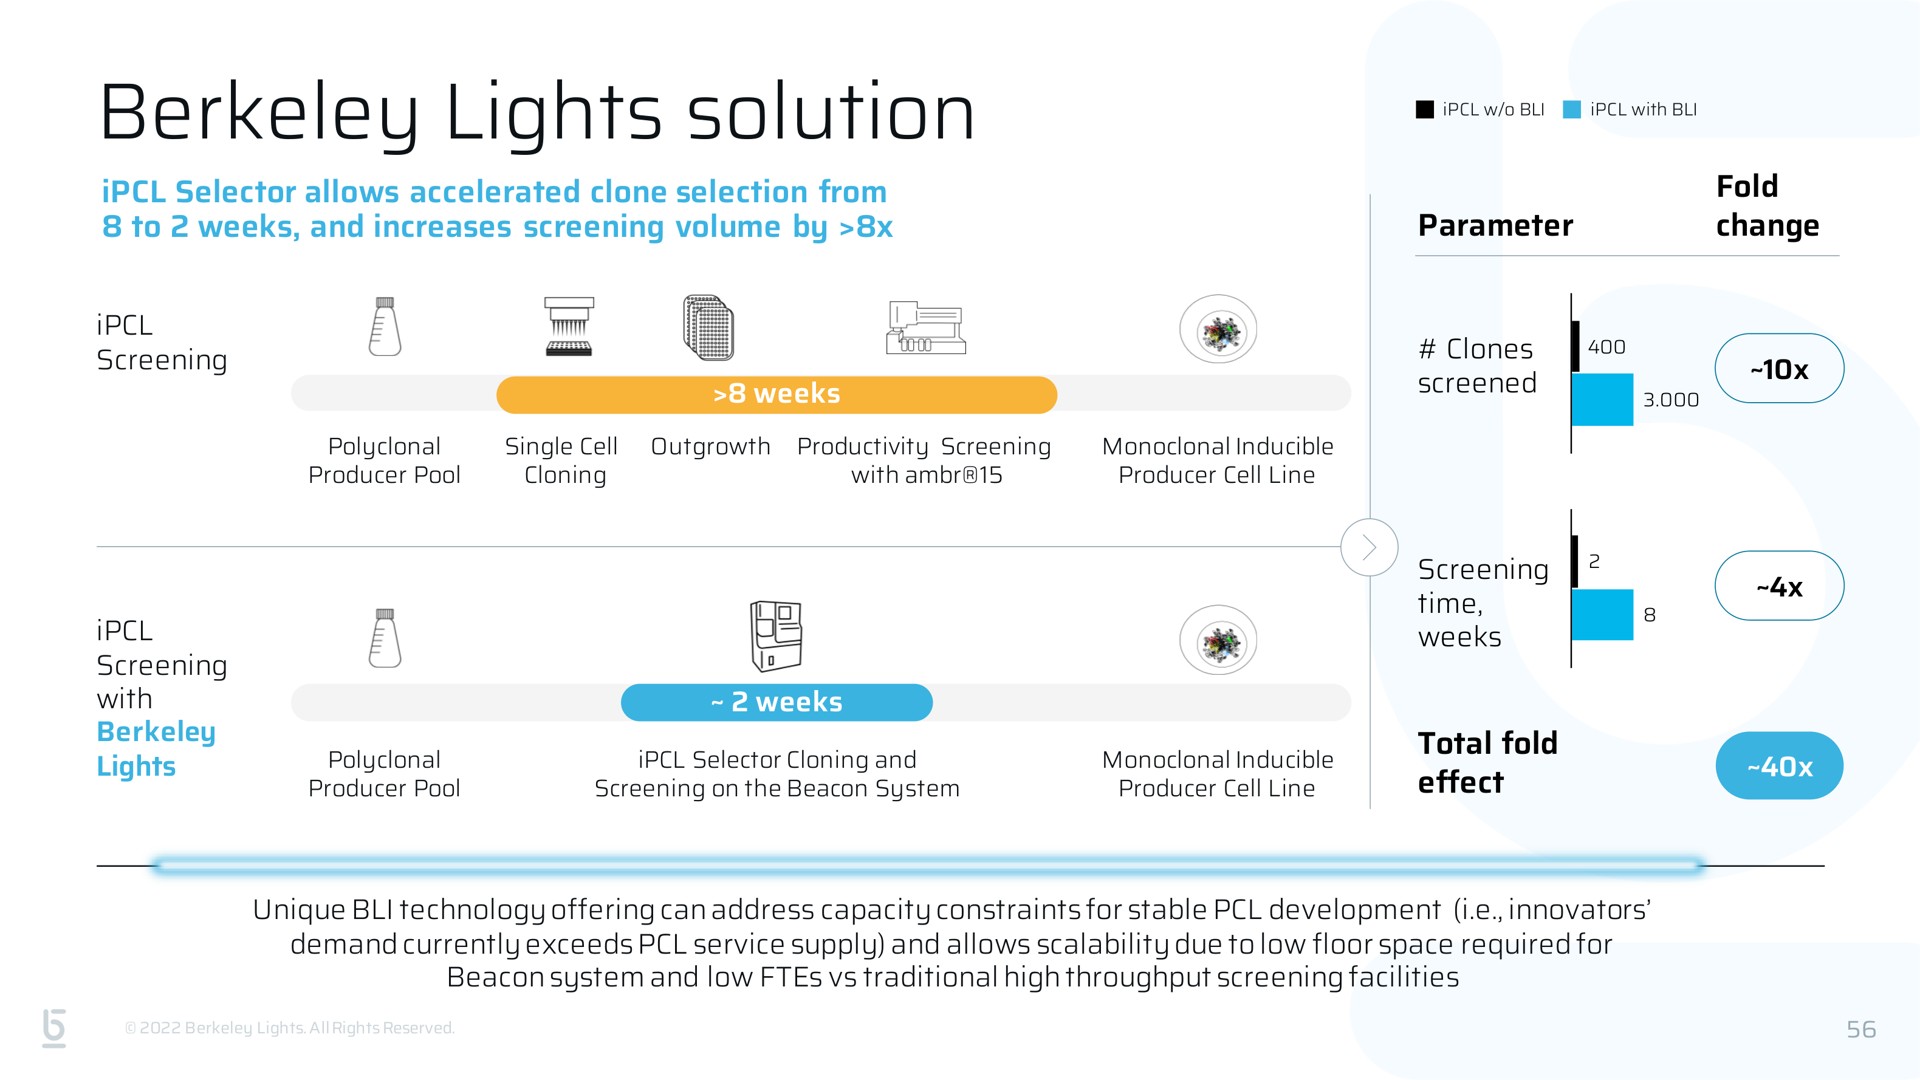 lights solution | Berkeley Lights